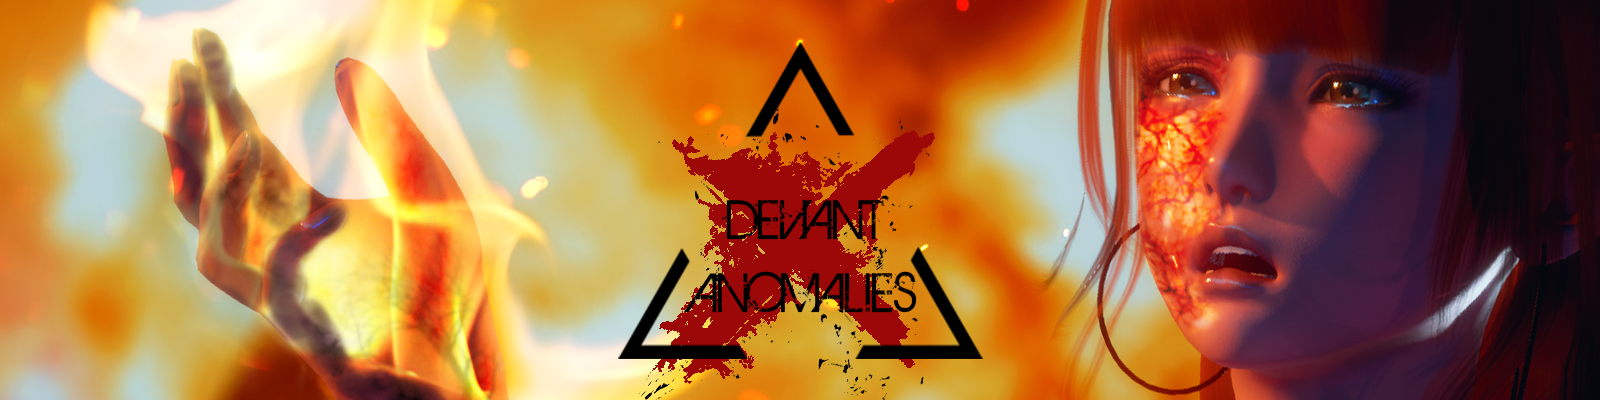 Deviant Anomalies1.png